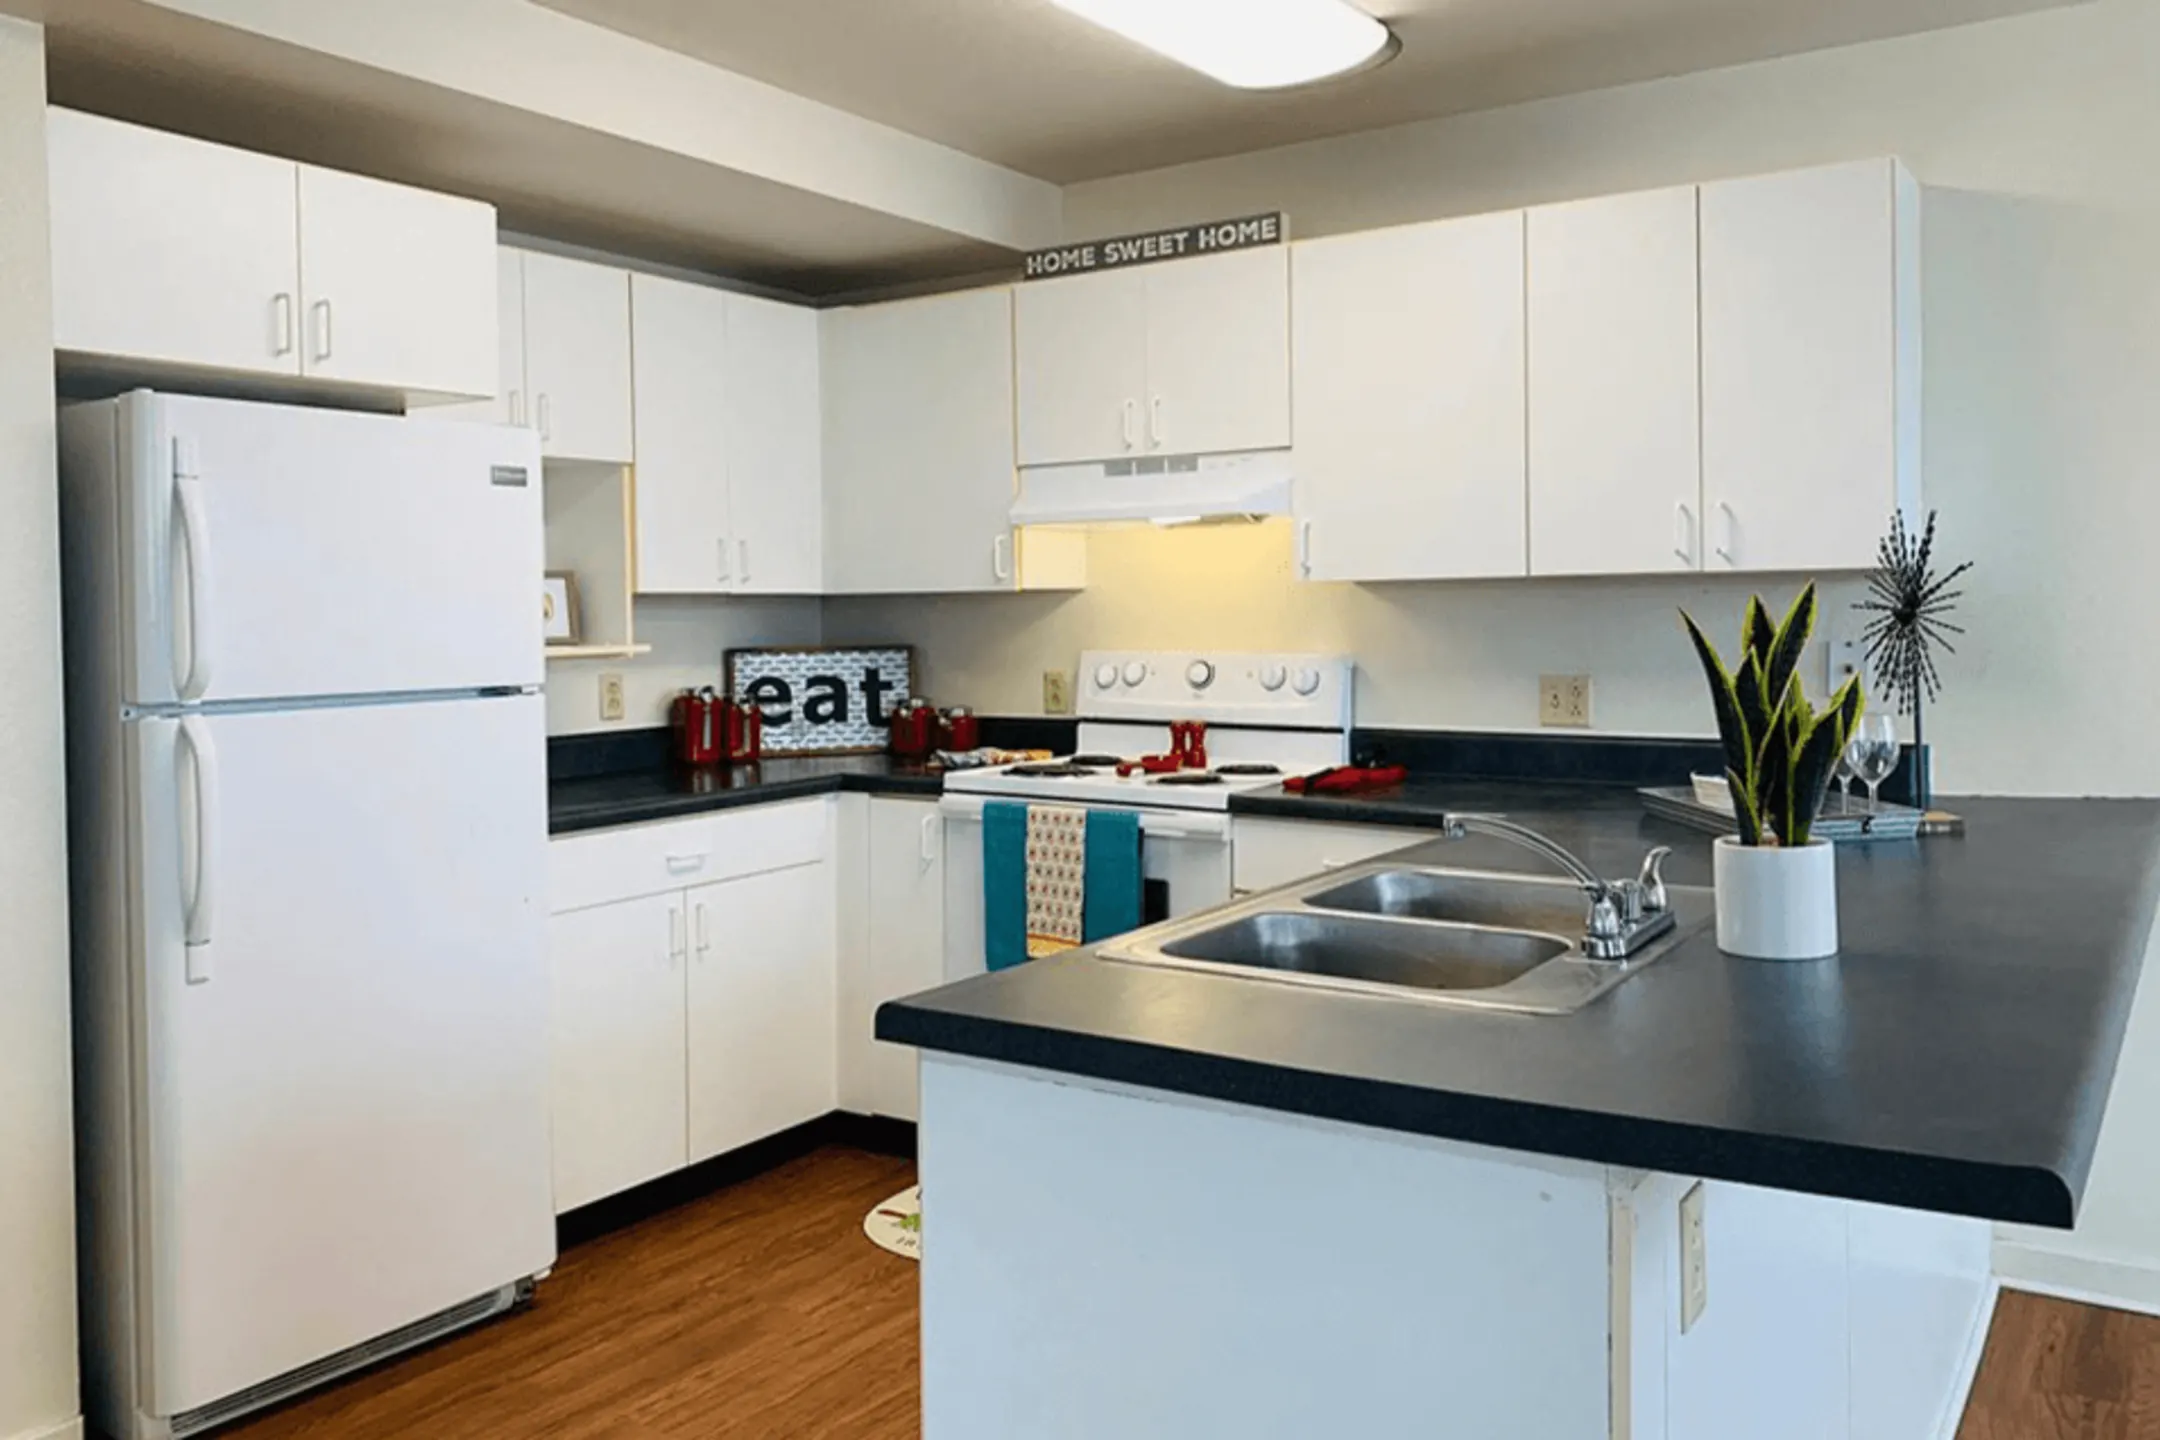 Kitchen - Le Claire Apartments - Moline, IL